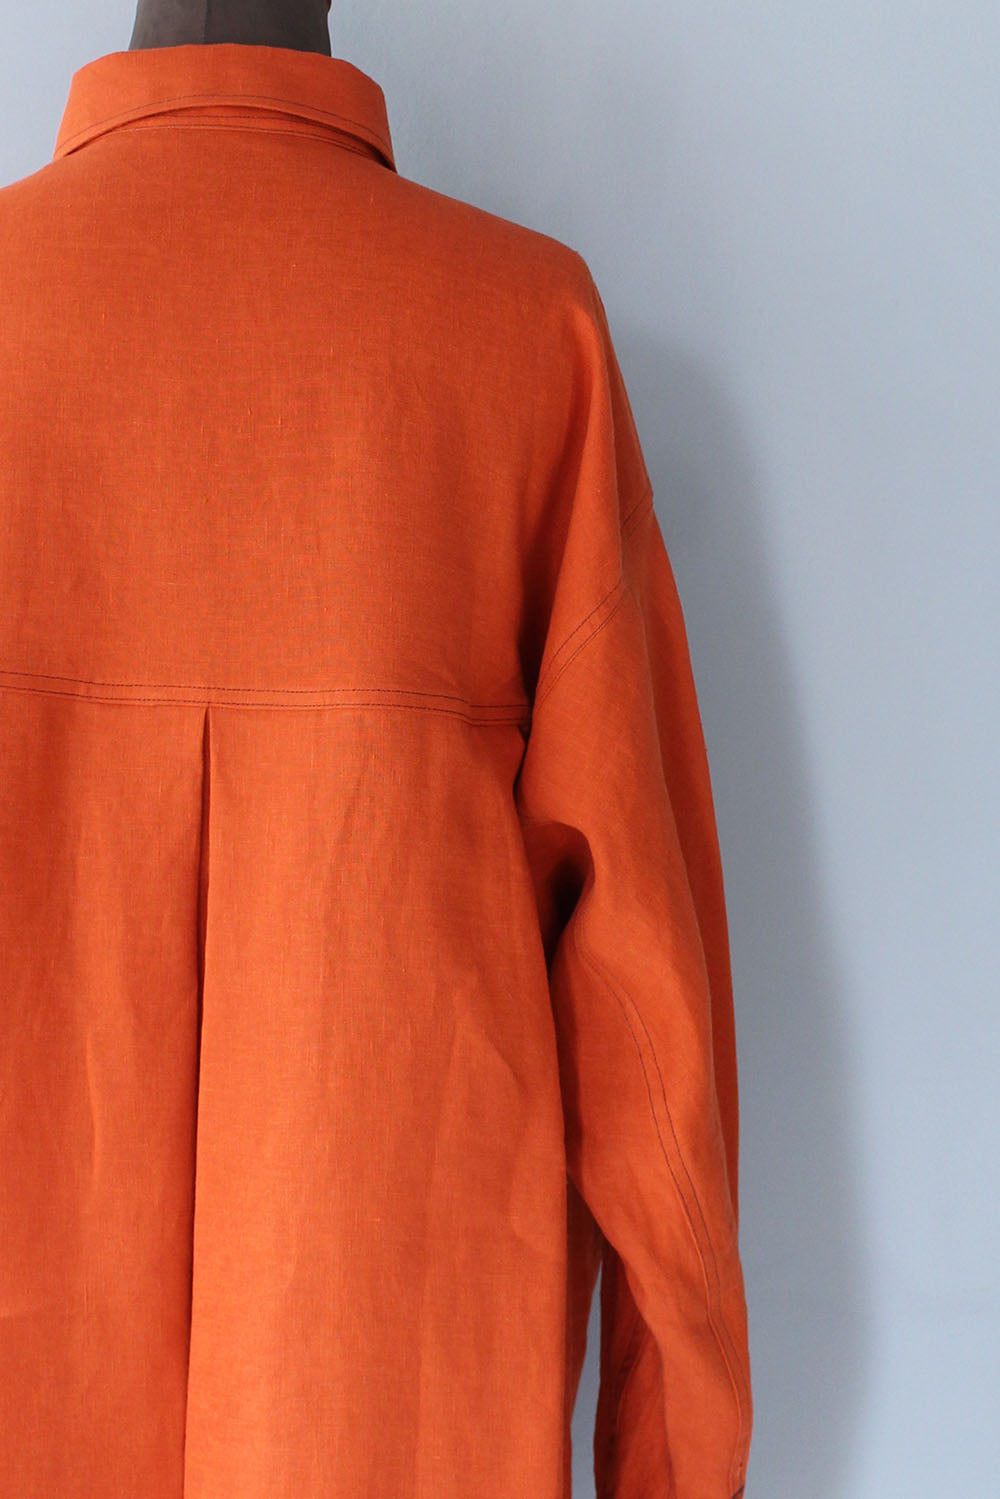 JUN MIKAMI “ linen shirt (orange) “